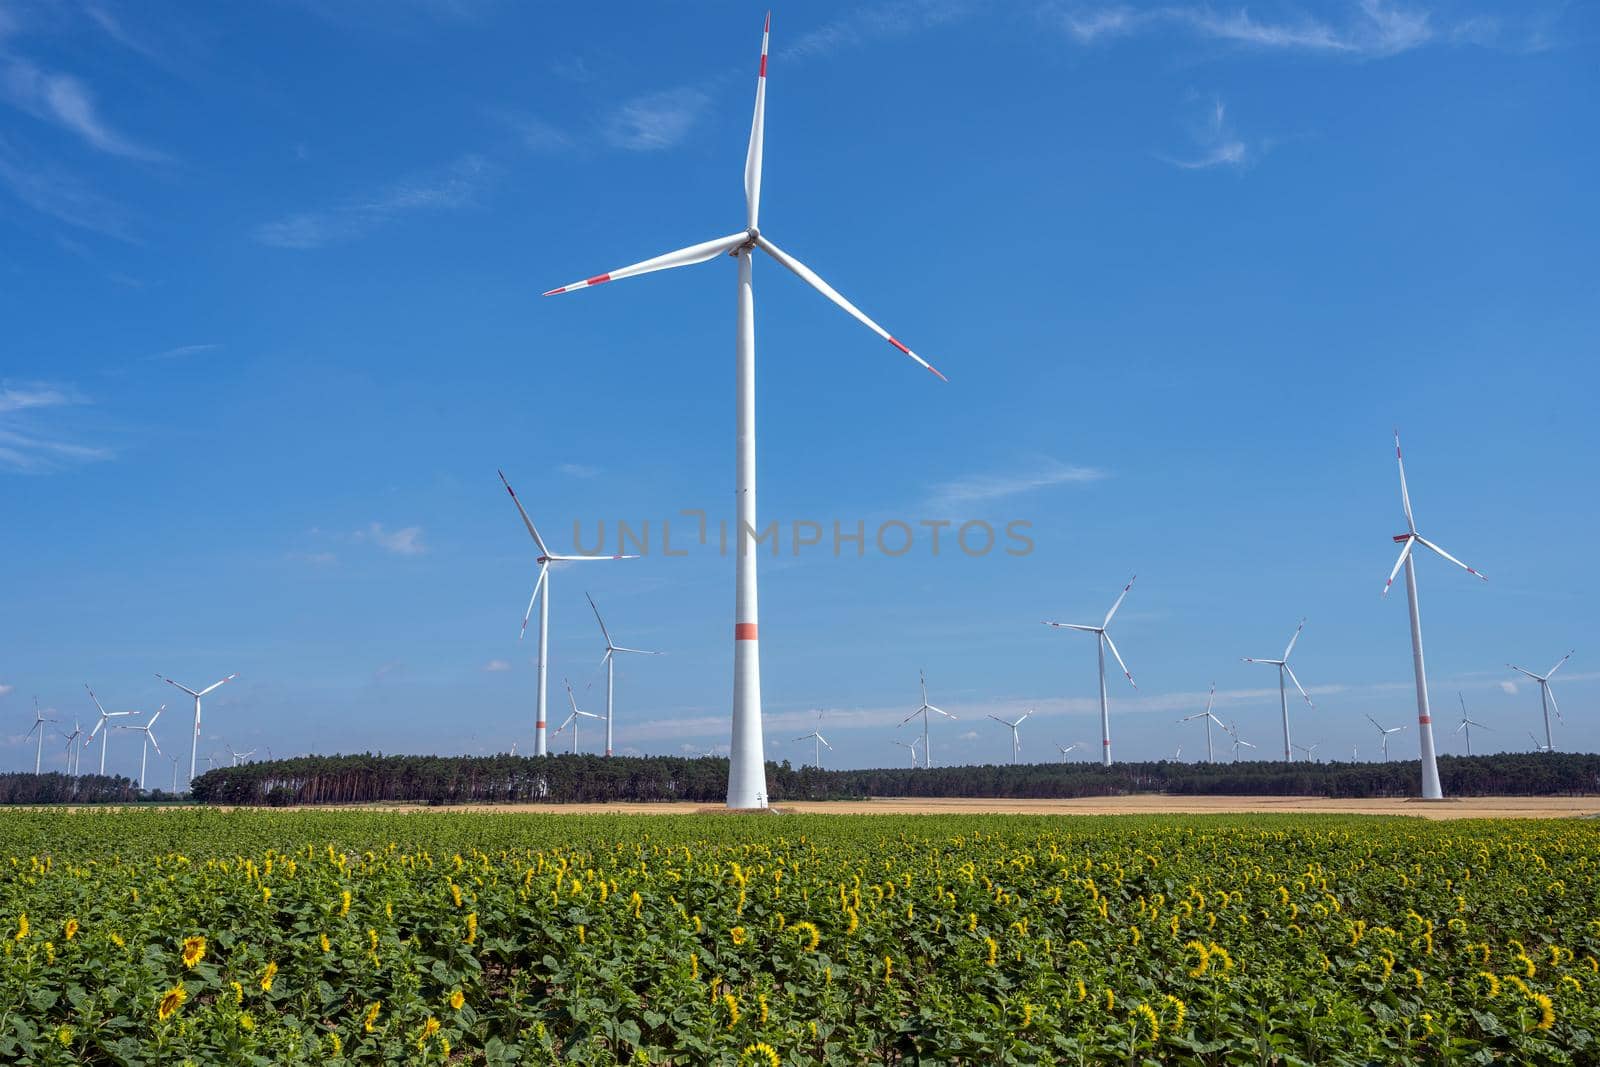 Modern wind energy turbines with blue skies seen in Germany